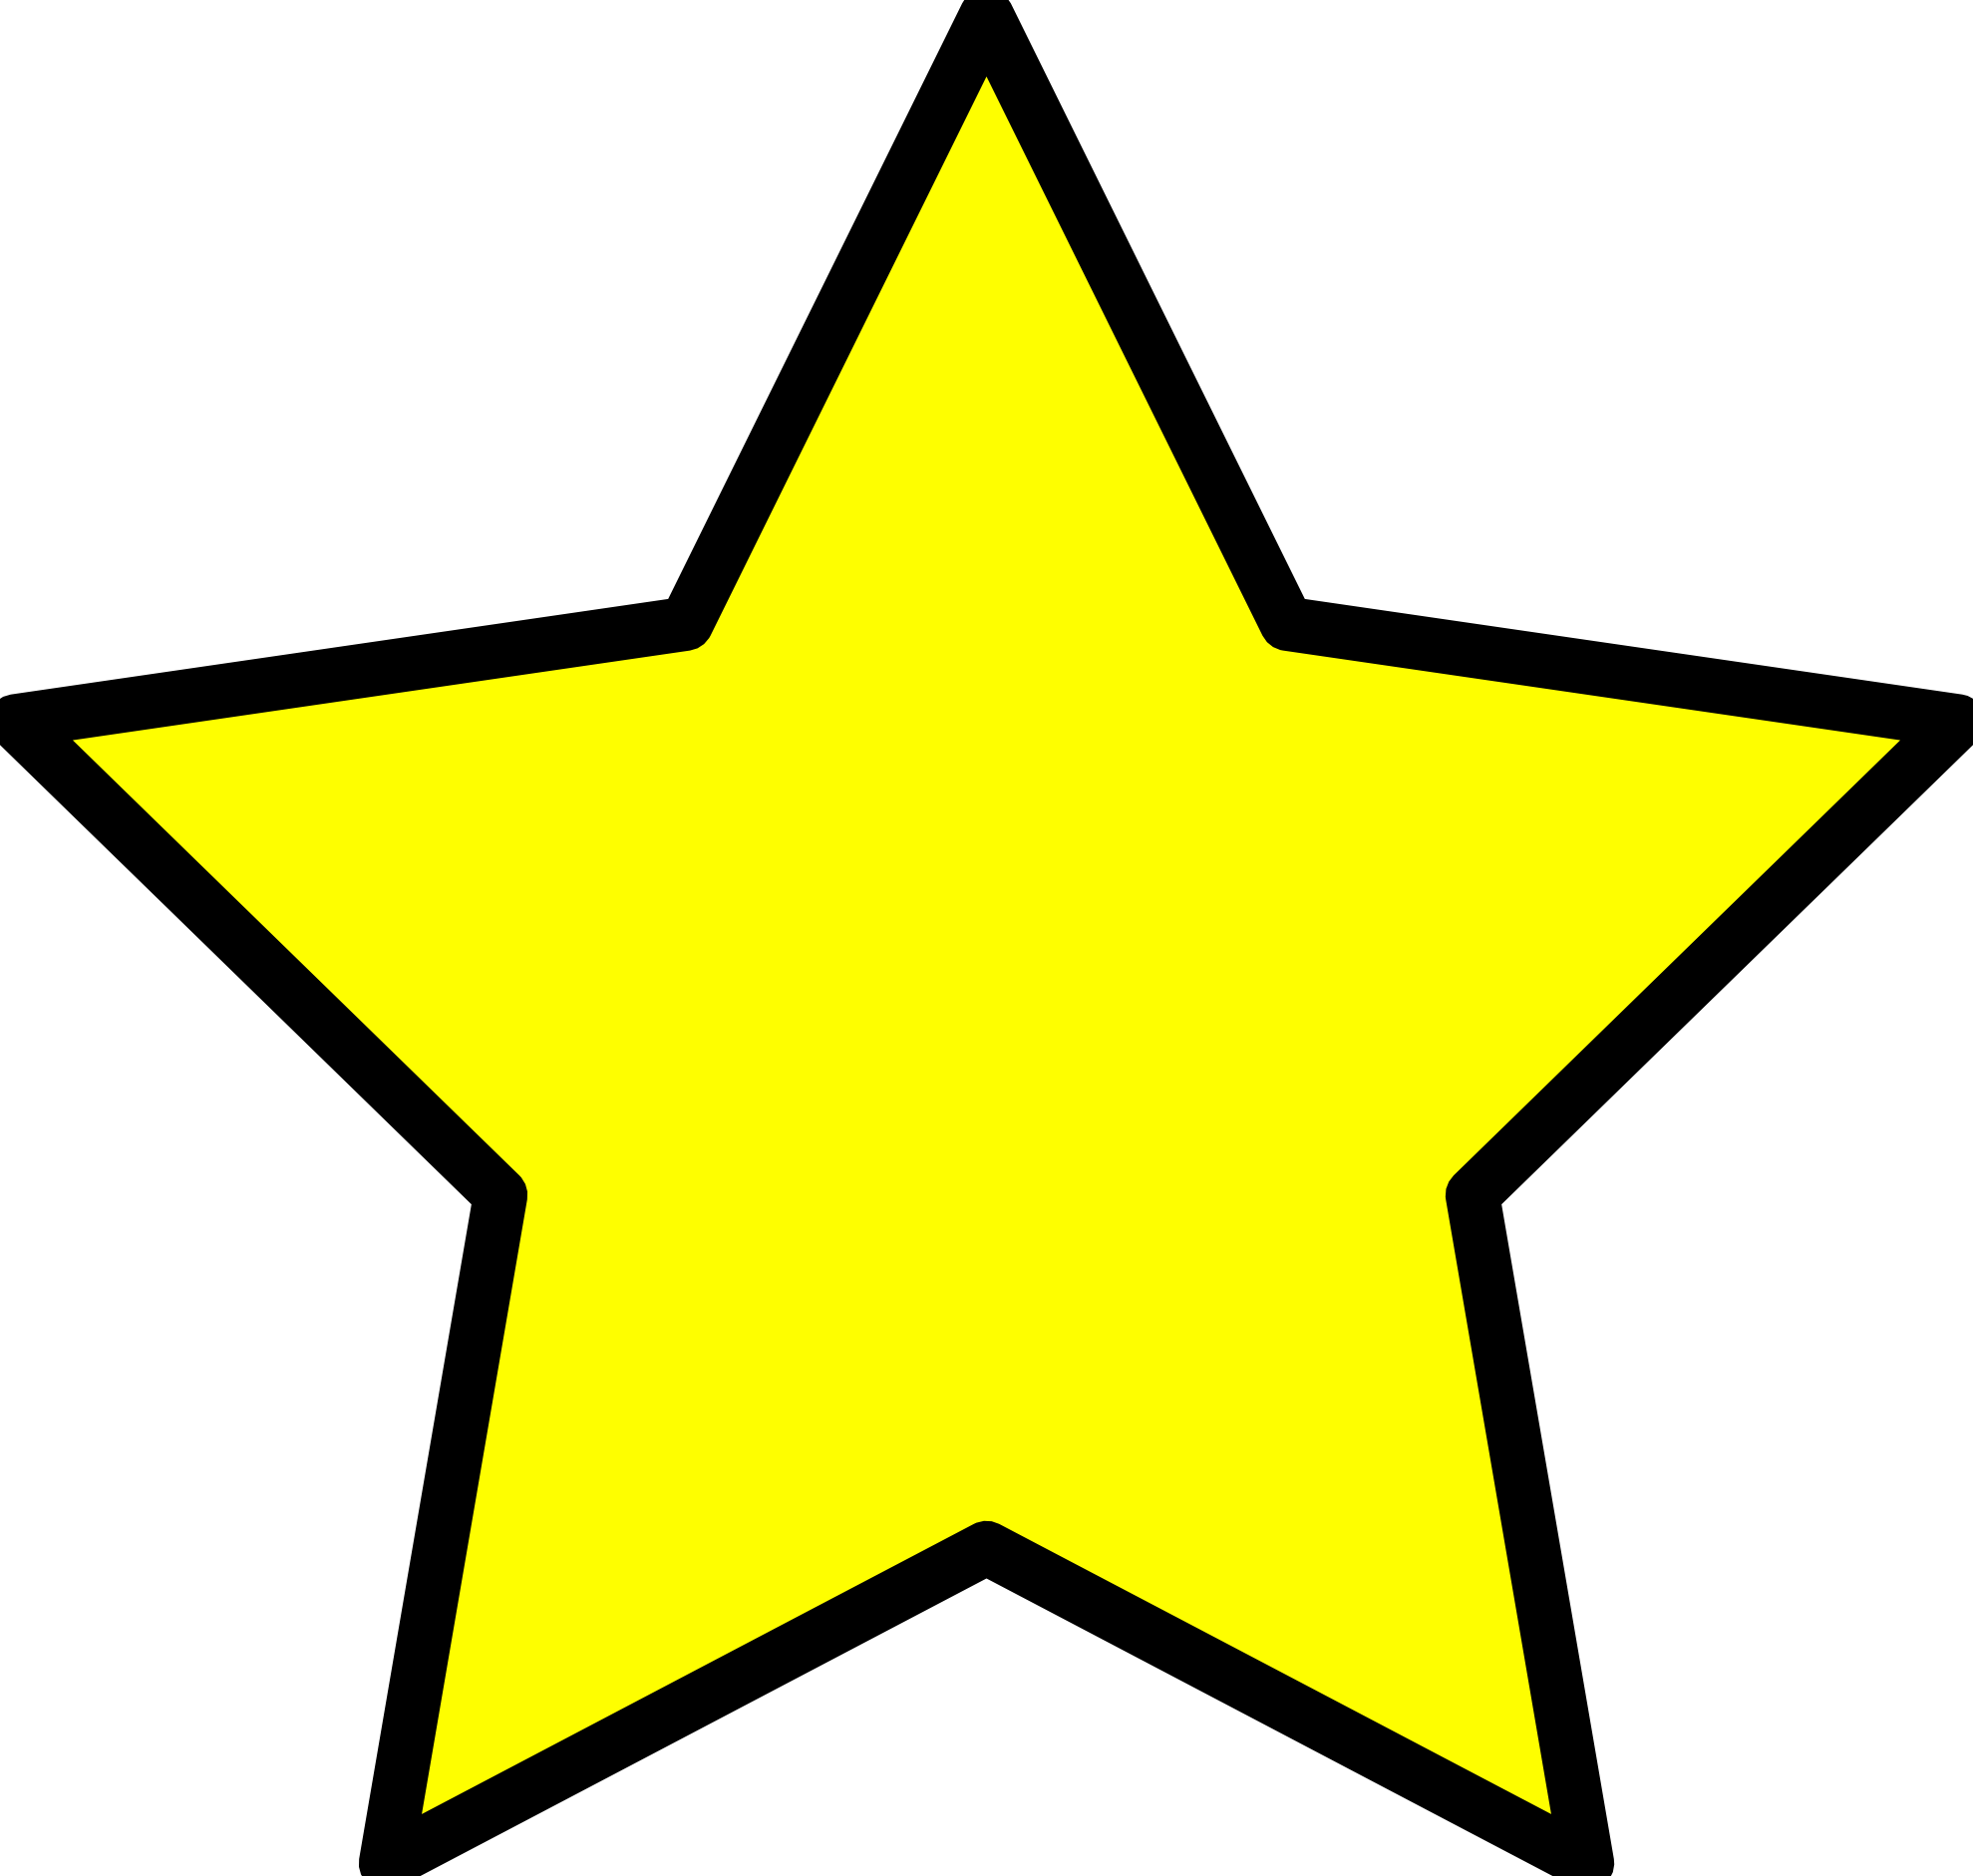 Star symbol clipart